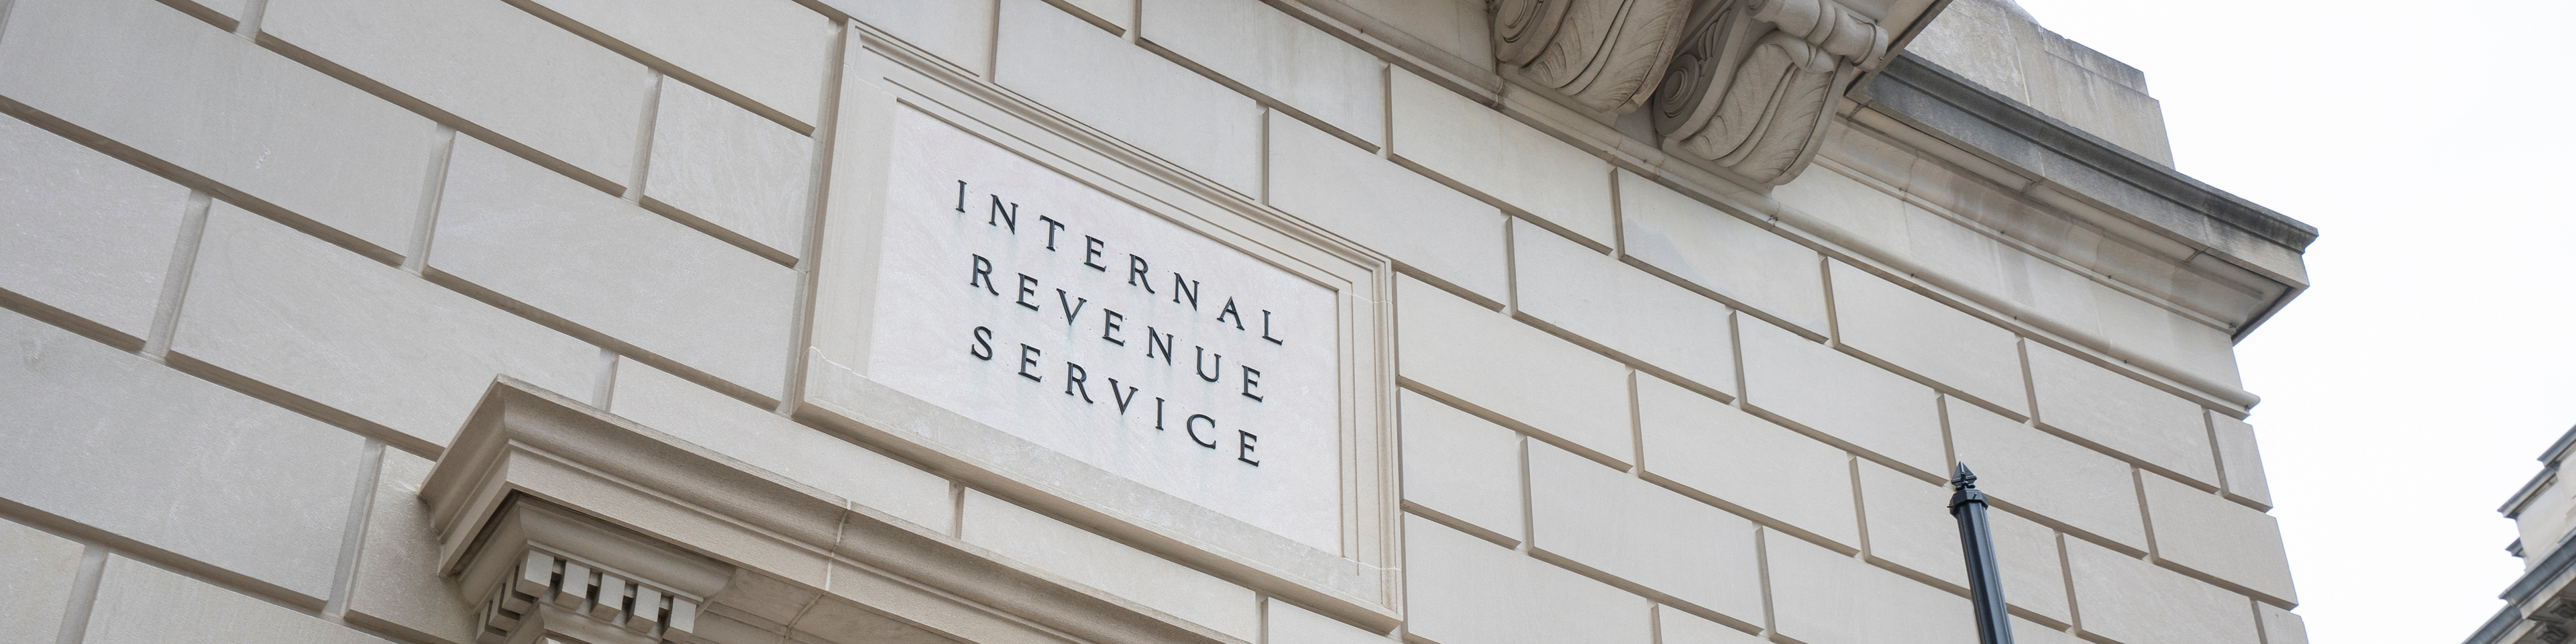 Internal-Revenue-Service-(IRS)-Building.jpeg